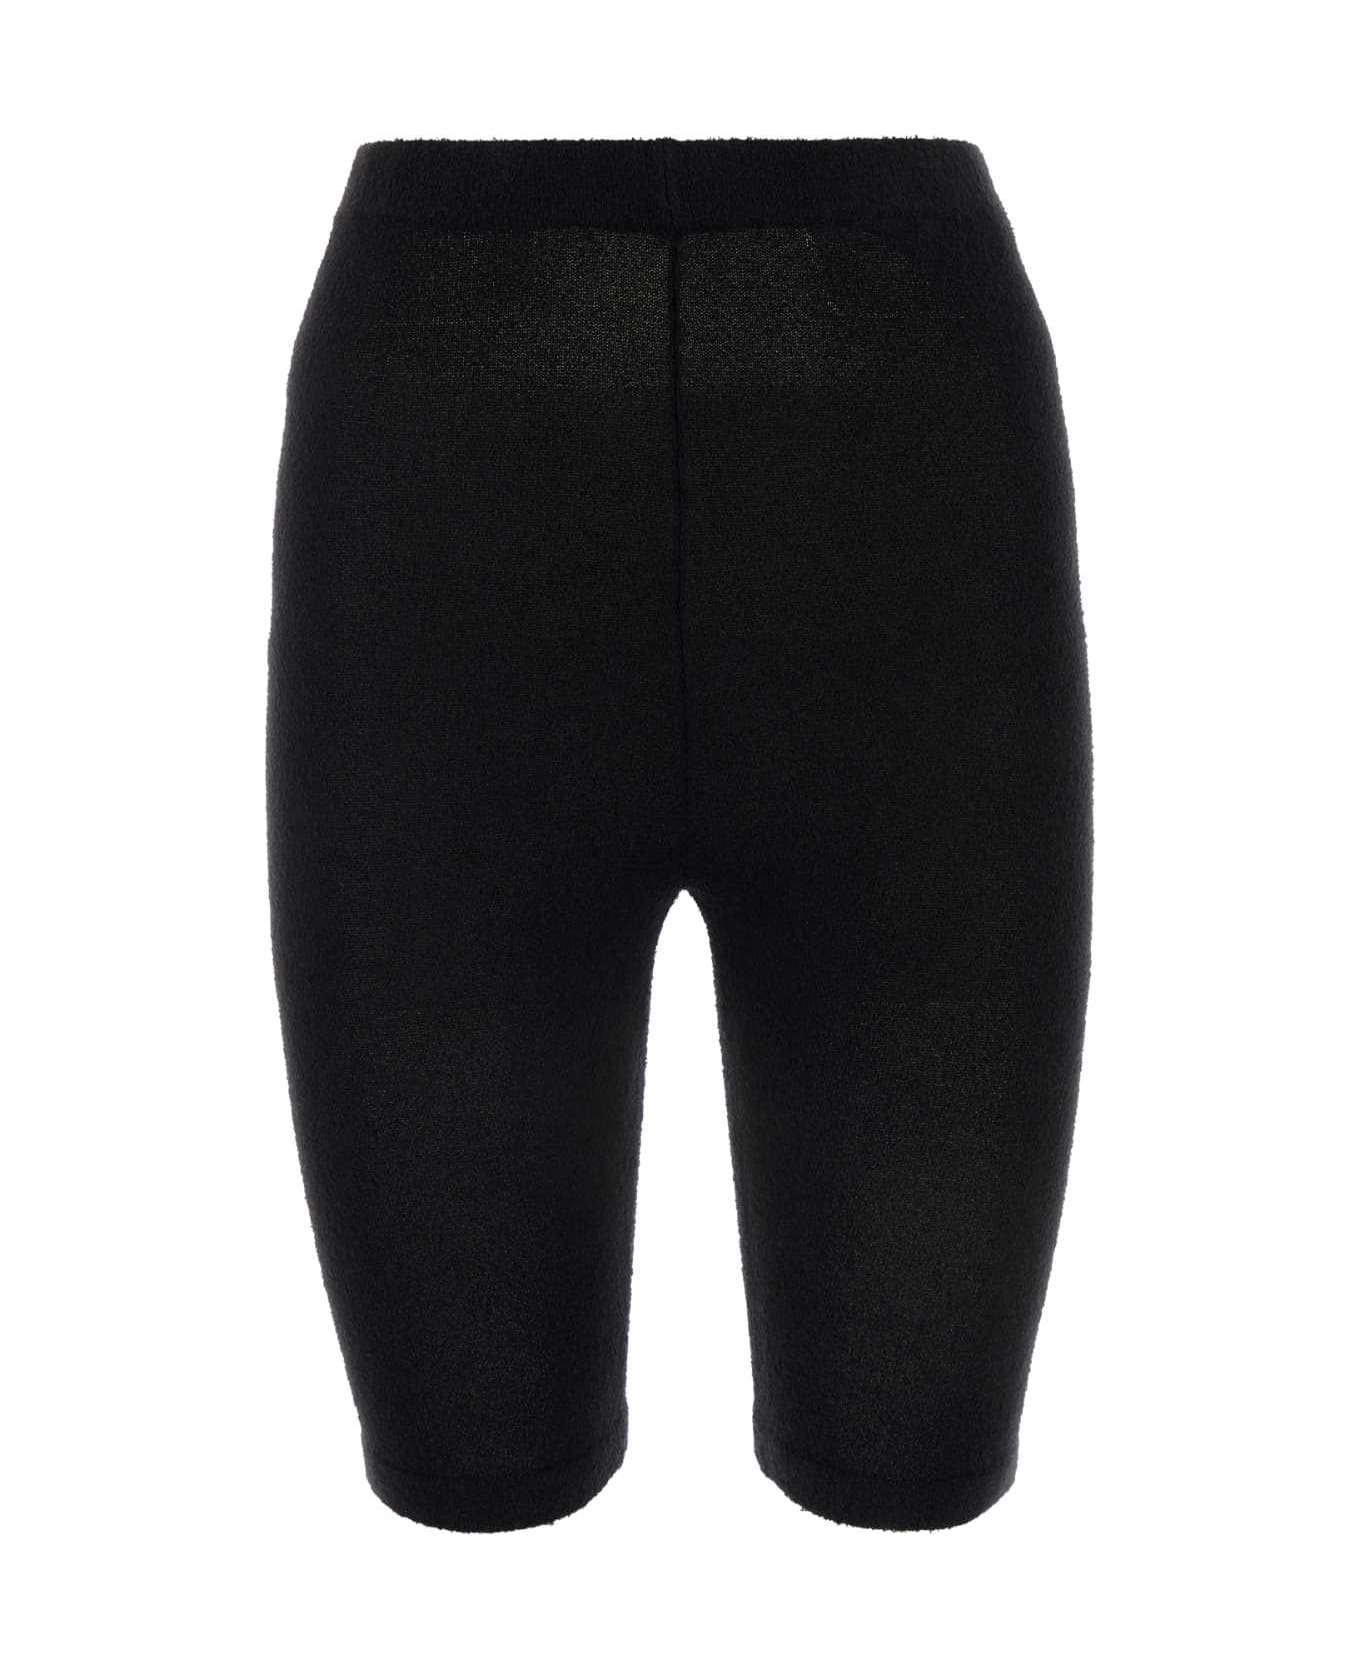 Balenciaga Black Stretch Terry Fabric Leggings - Black